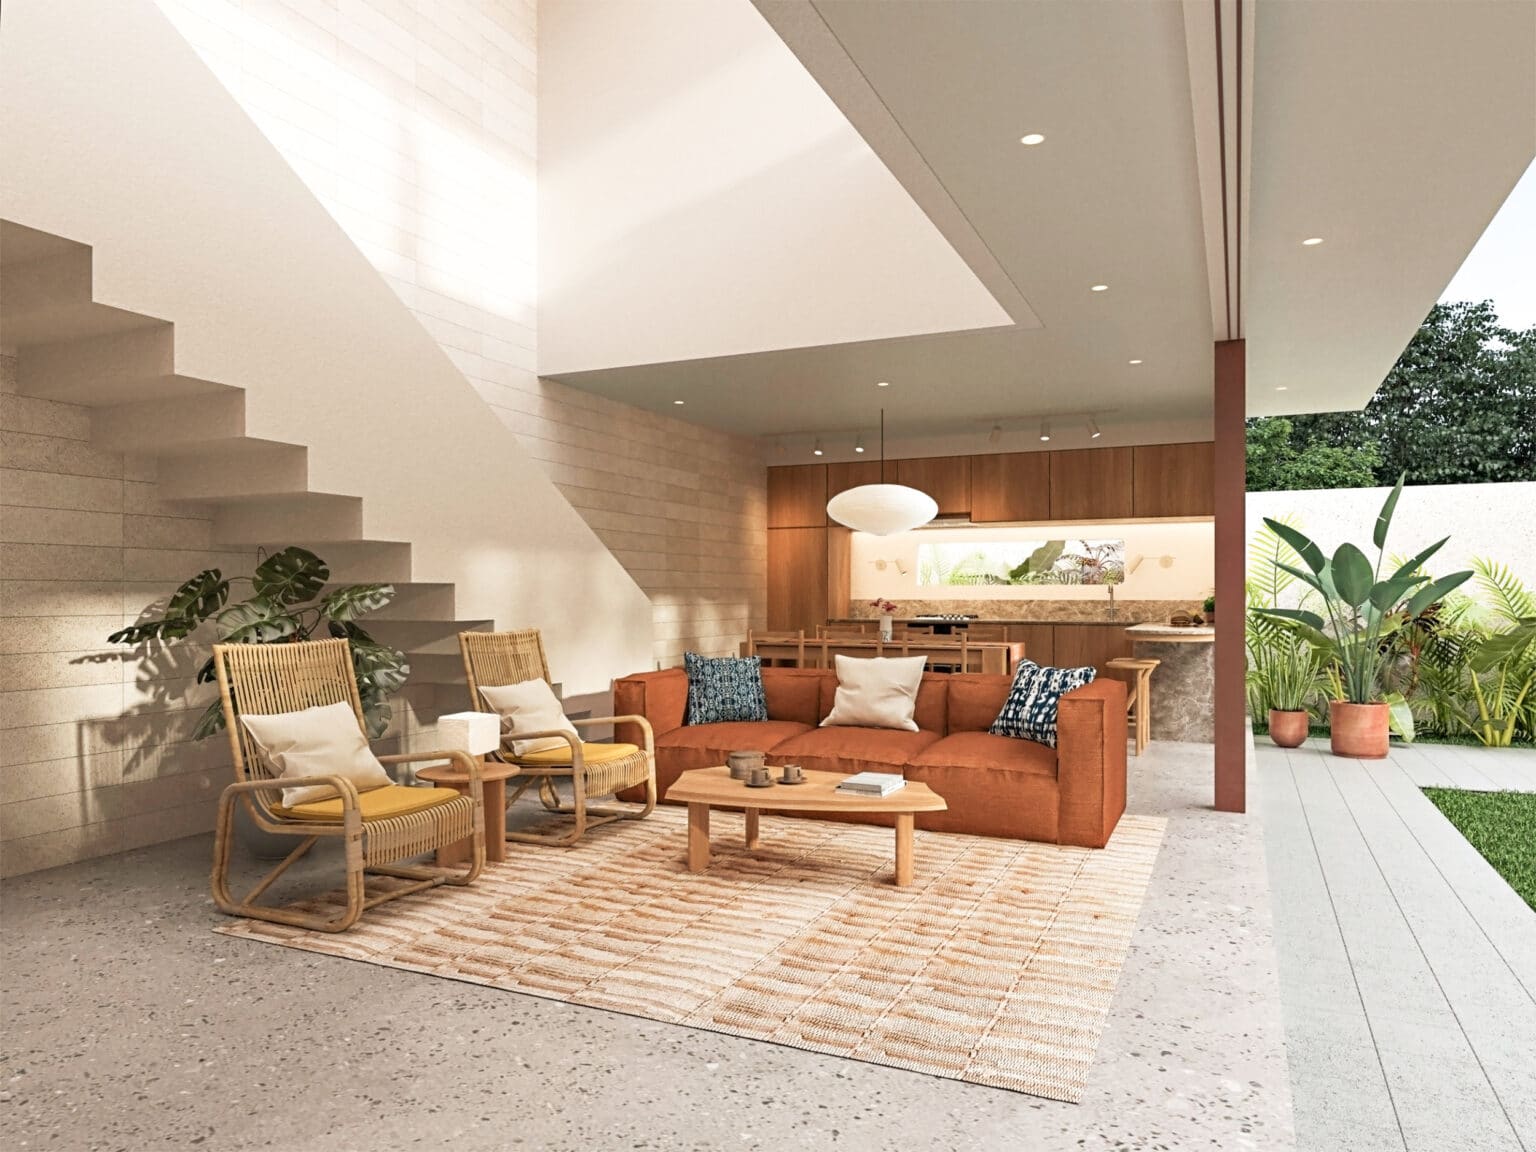 Design Assembly - Suku House - Bali Architect - Interior Design - Bali Villa - Wooden Facade - Living Room